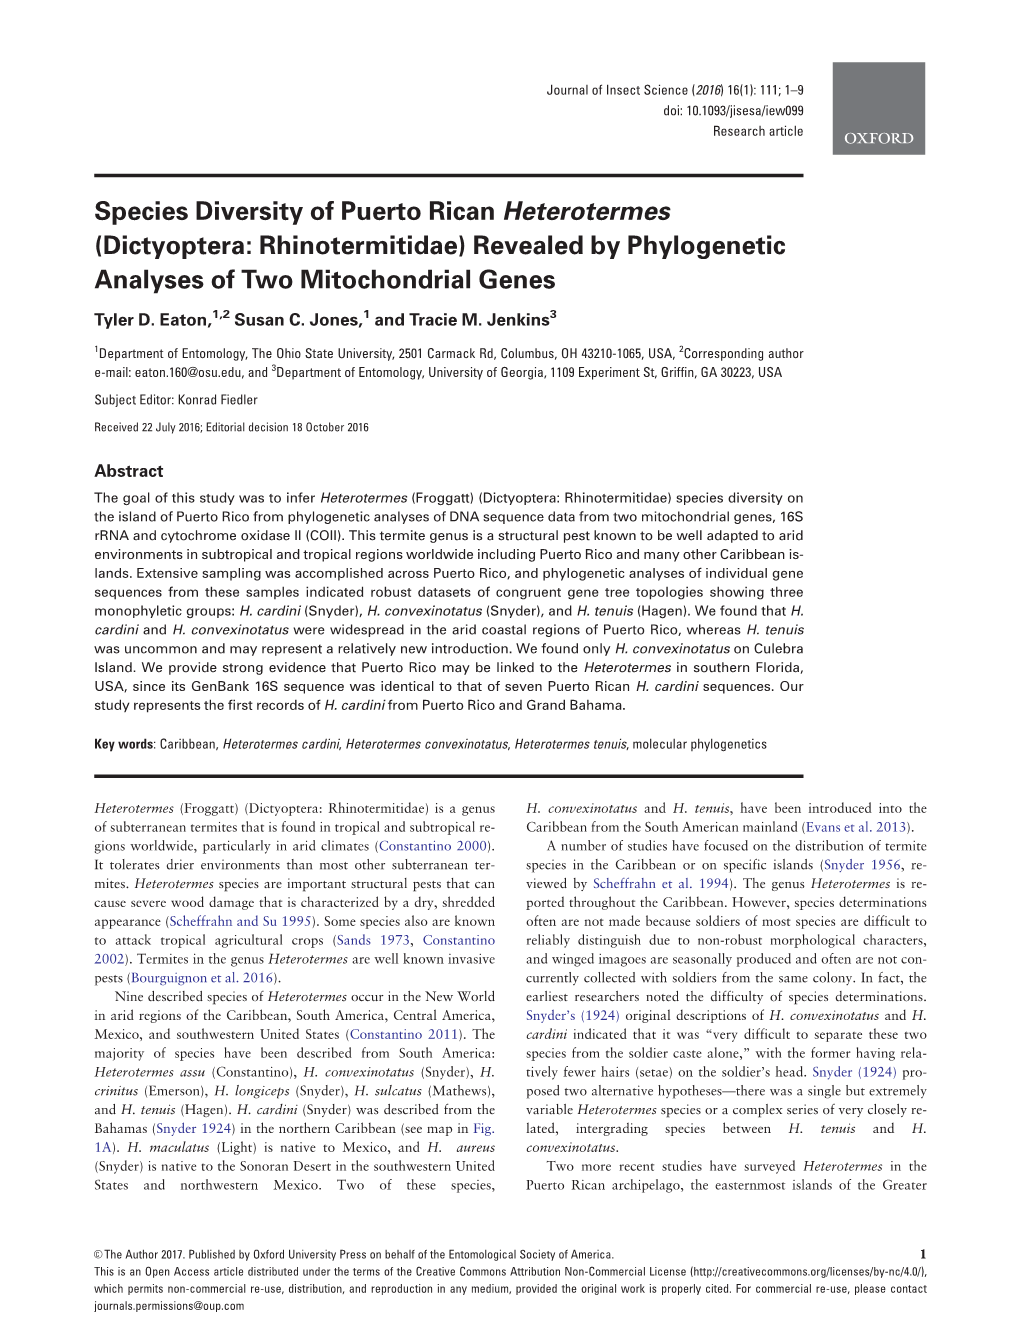 Species Diversity of Puerto Rican Heterotermes (Dictyoptera: Rhinotermitidae) Revealed by Phylogenetic Analyses of Two Mitochondrial Genes